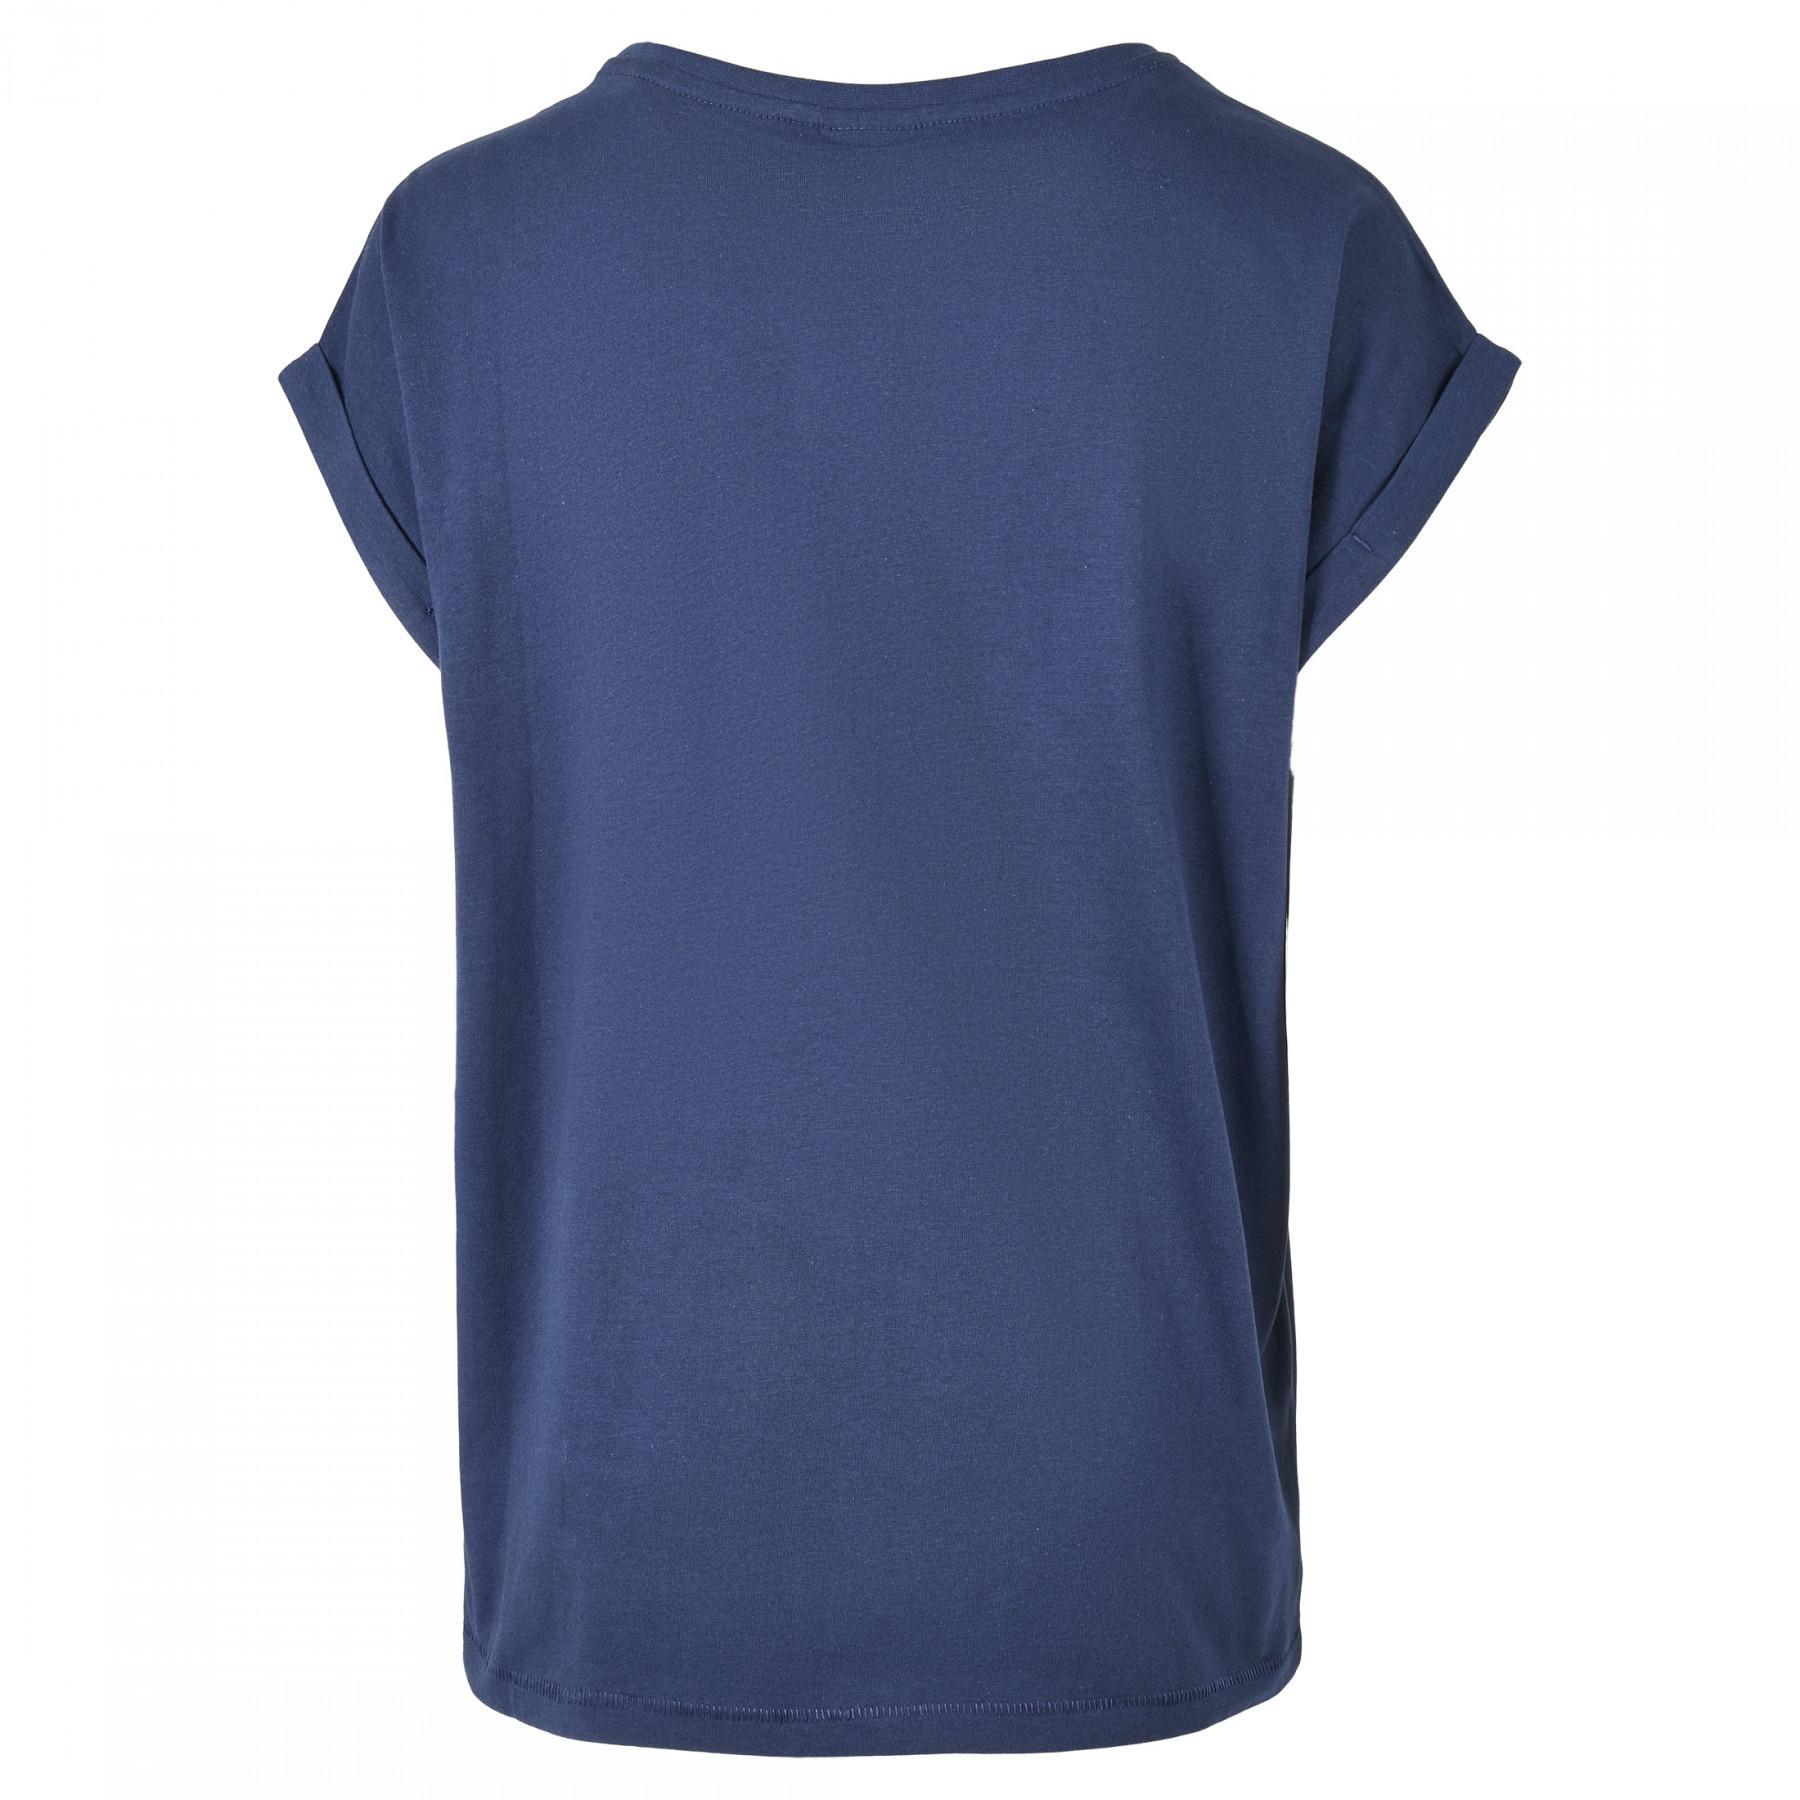 T-shirt mulher Urban Classics extended shoulder (tamanhos grandes)